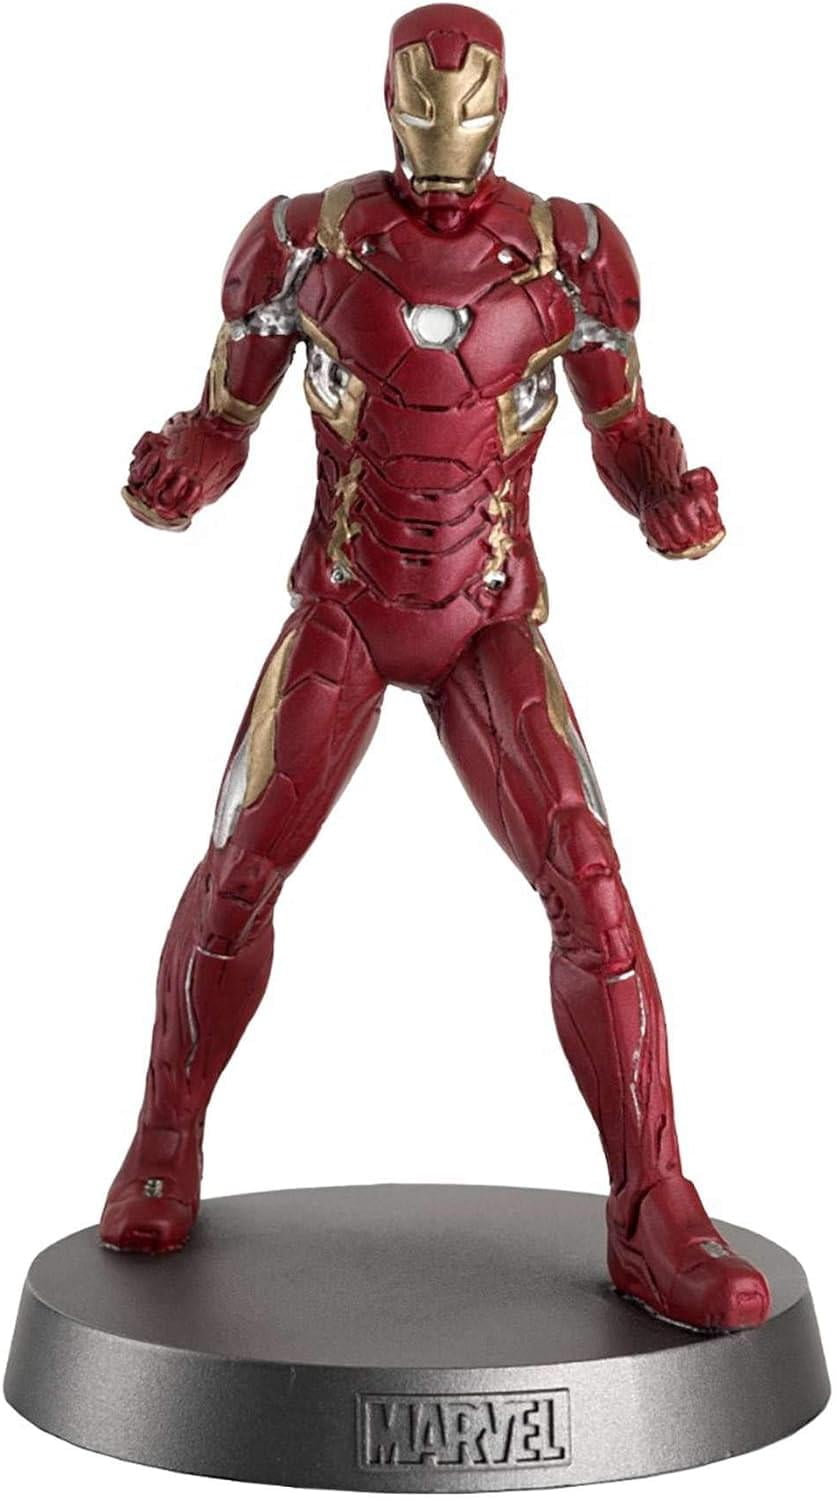 Hero Collector Marvel Heavyweights Collection | Groot Heavyweight Metal  Figurine 4 by Eaglemoss